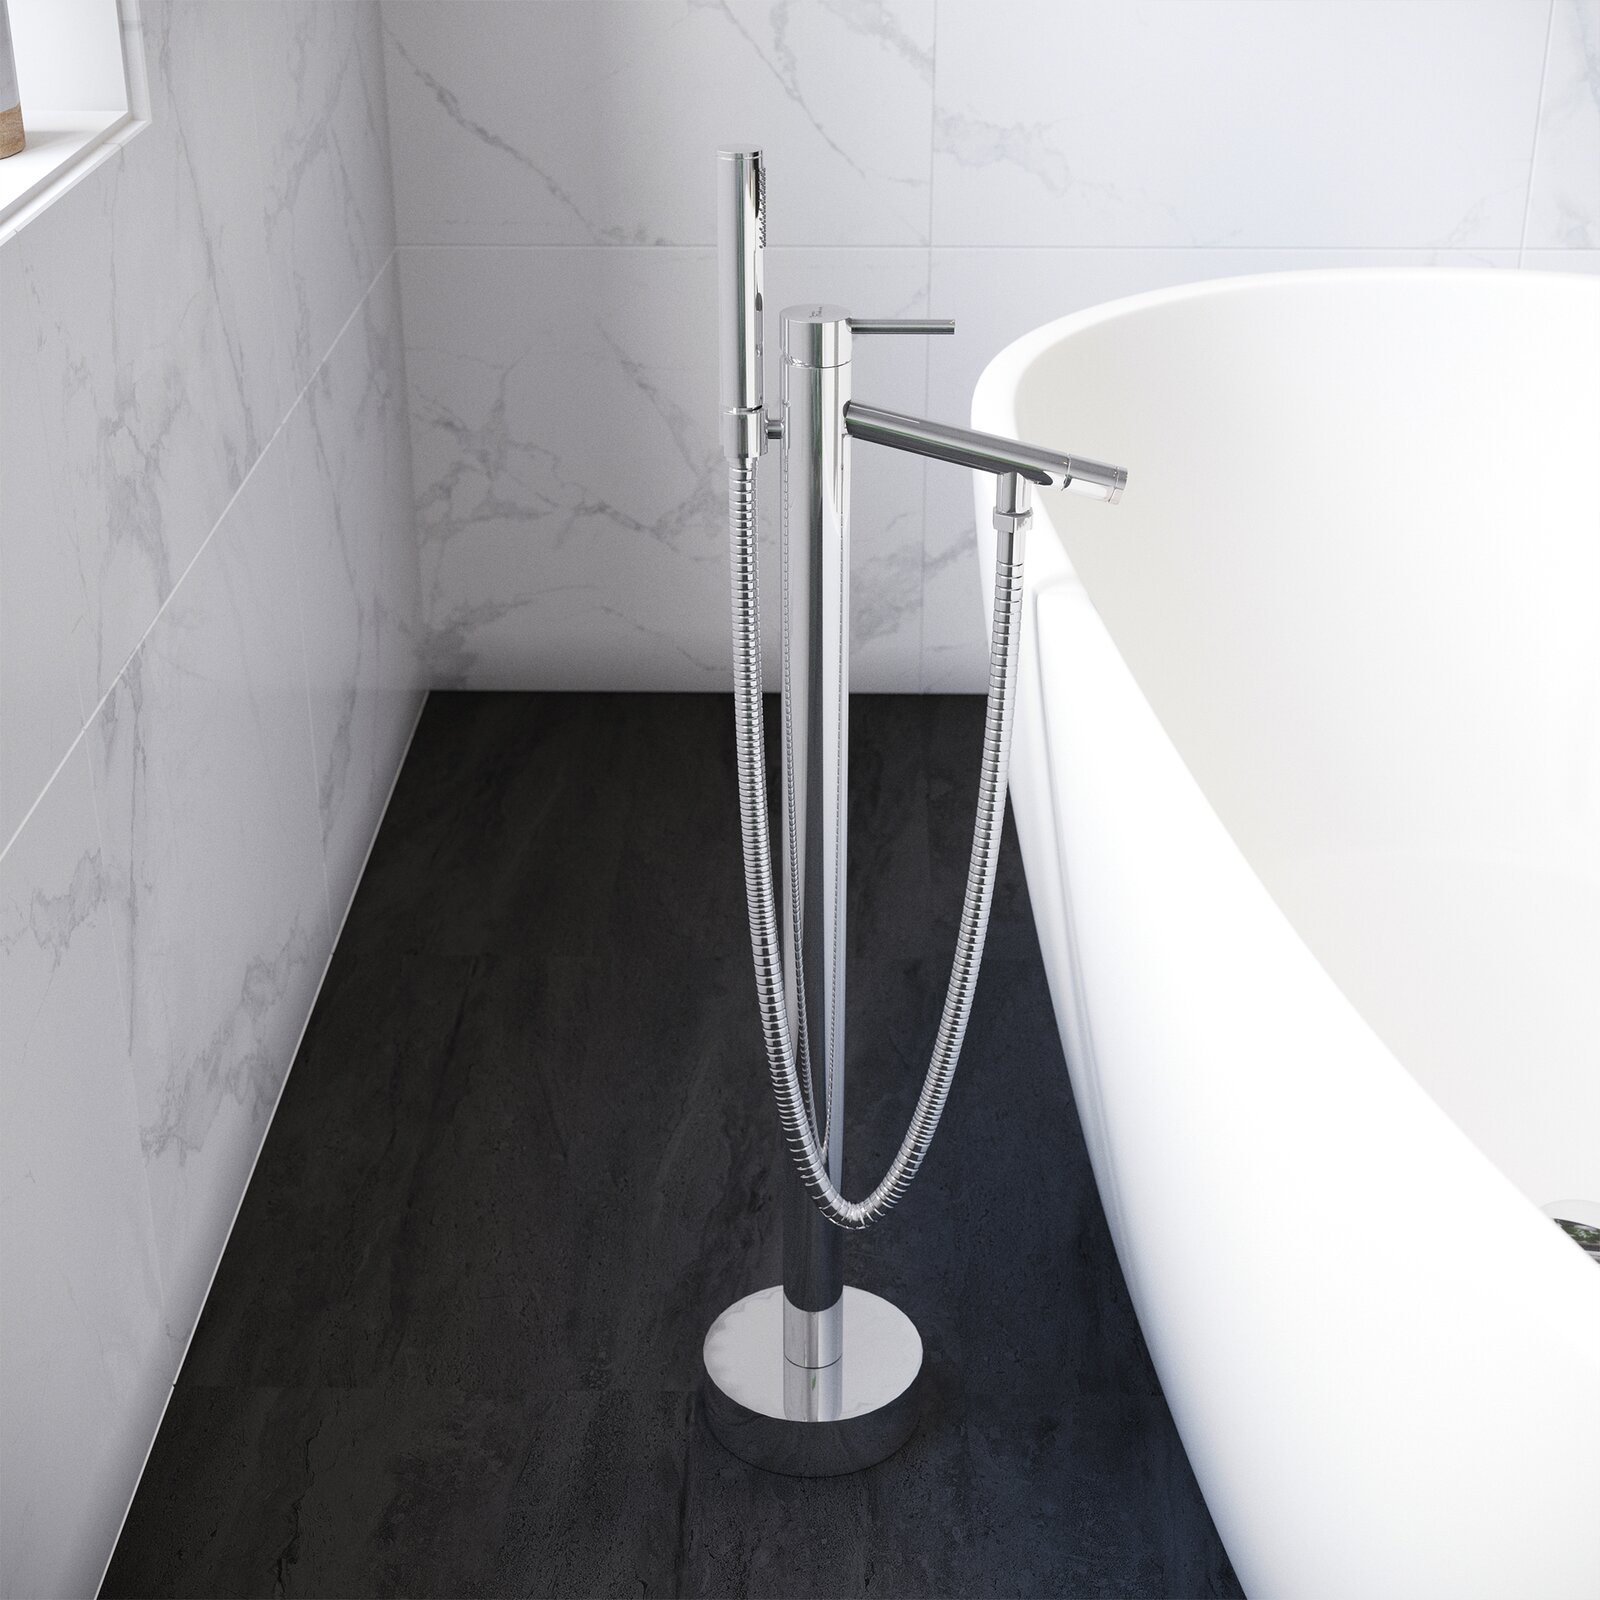 Aquacubic Floor Mounted Brass Bathroom Freestanding Tub Filler Bathtub Faucet with Hand Shower